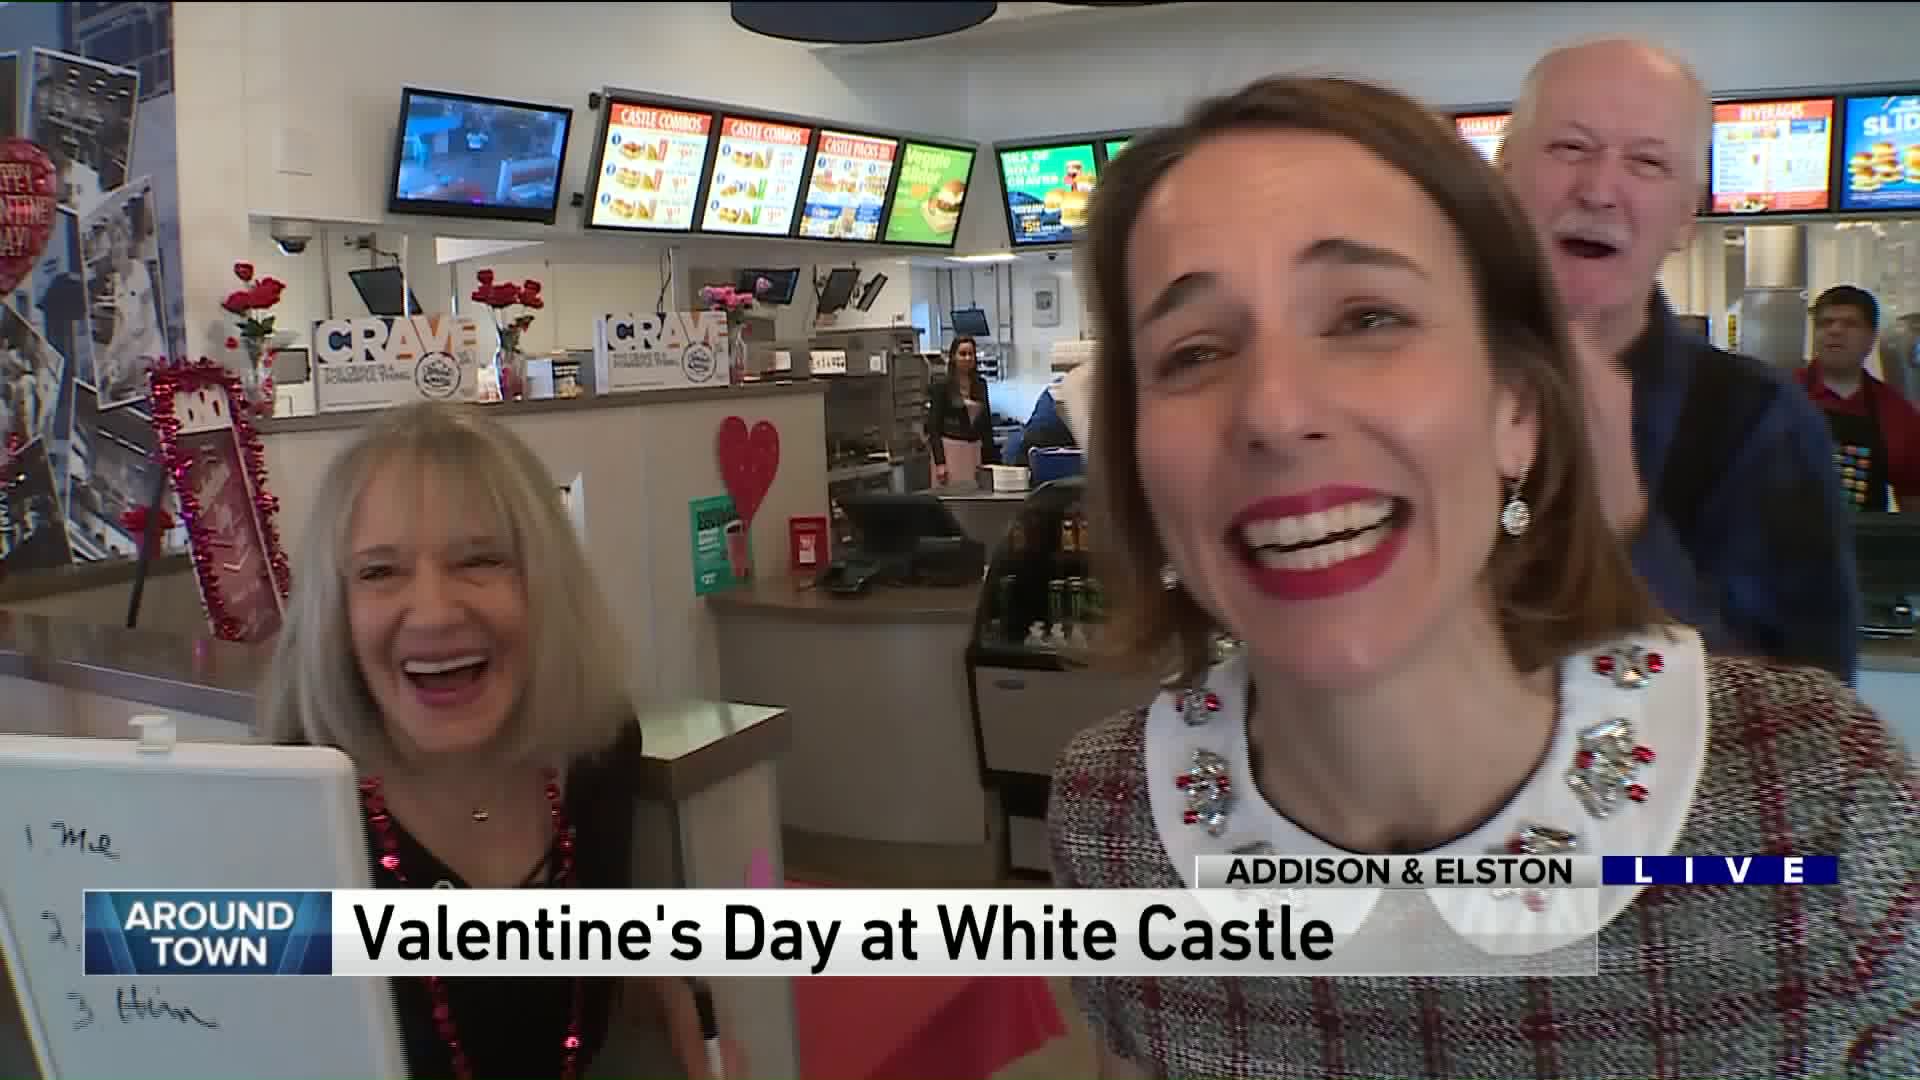 Around Town celebrates Valentine’s Day at White Castle